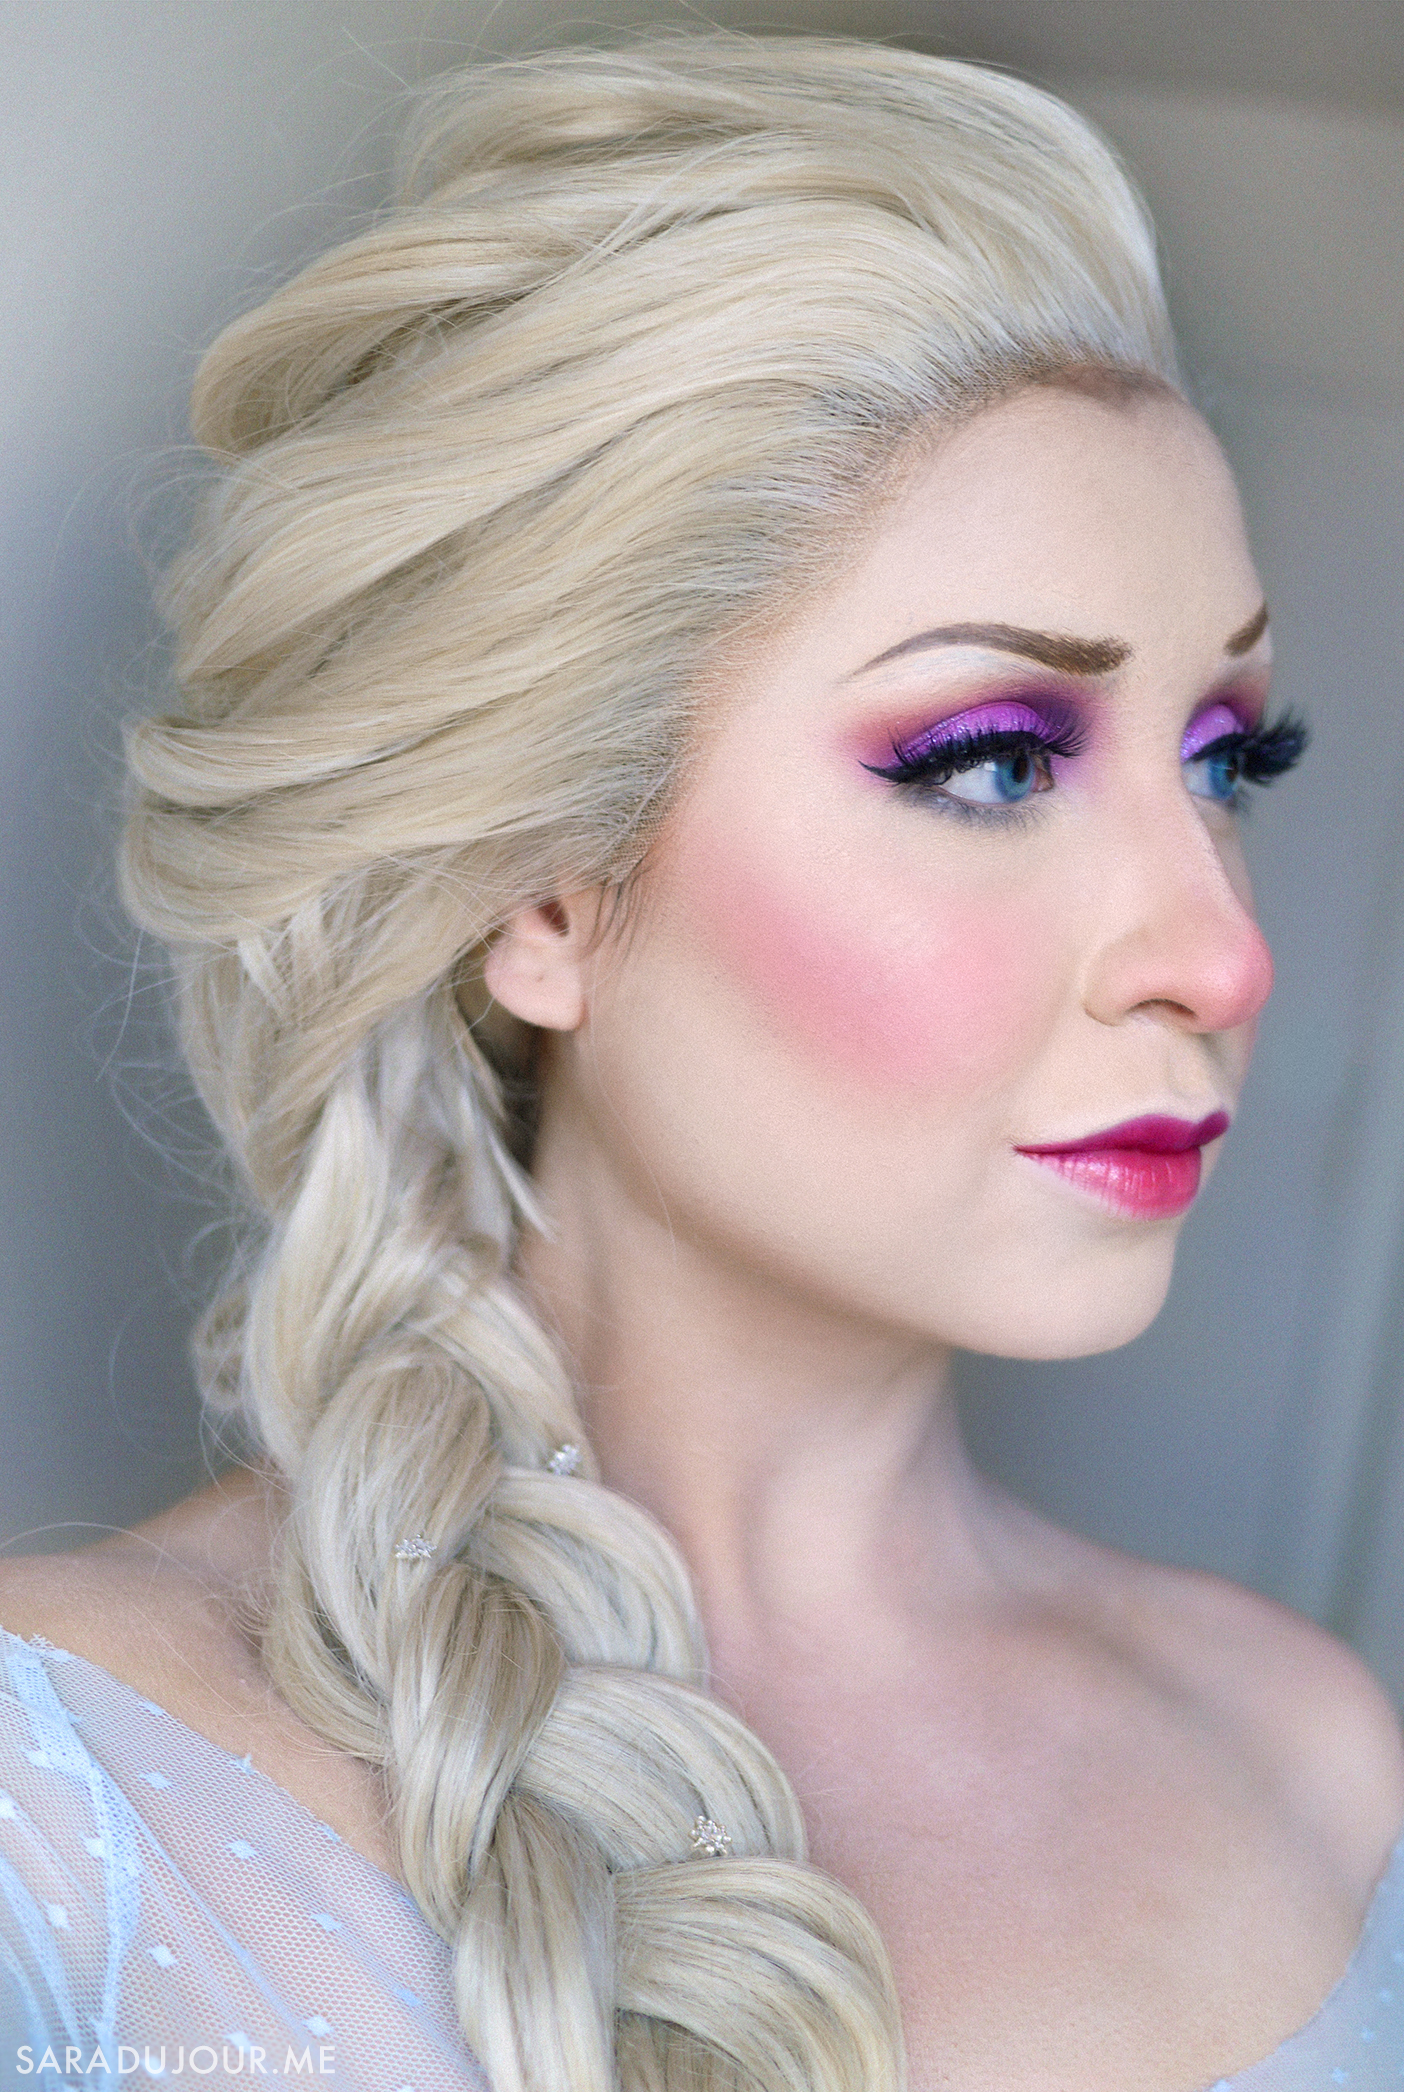 Elsa Frozen Cosplay + Makeup | Sara du Jour